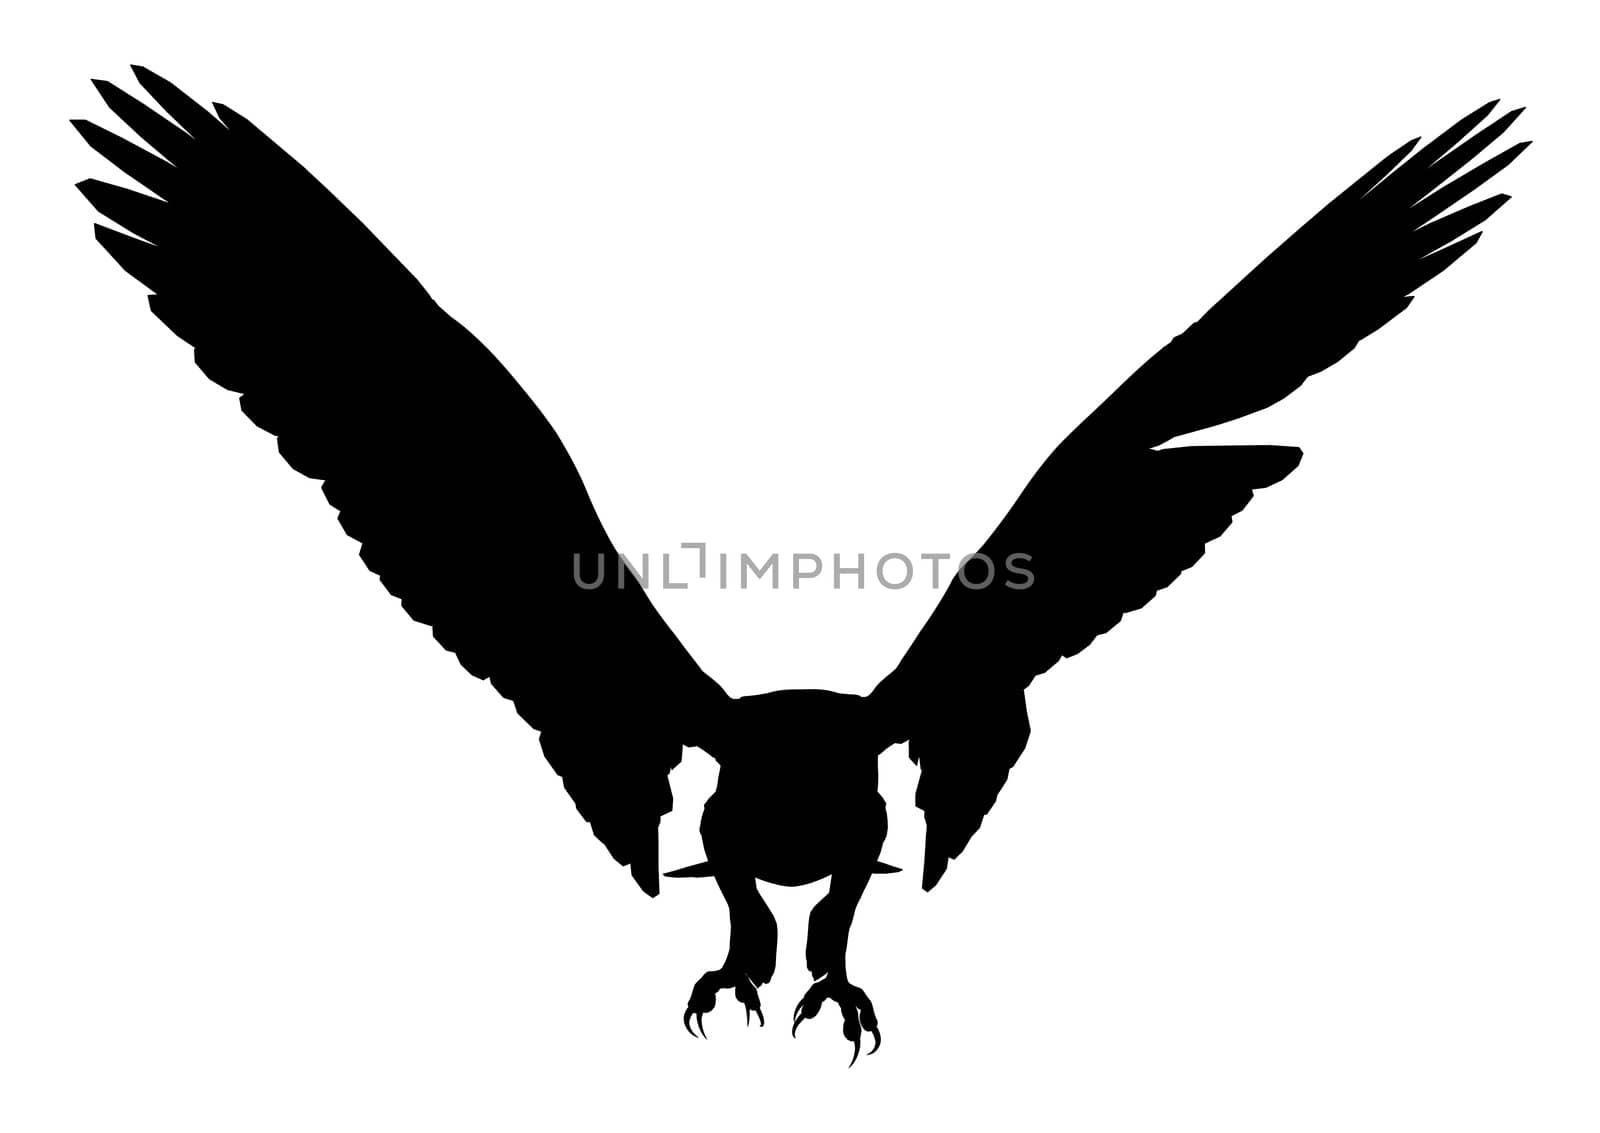 Black eagle art illustration silhouette on a white background